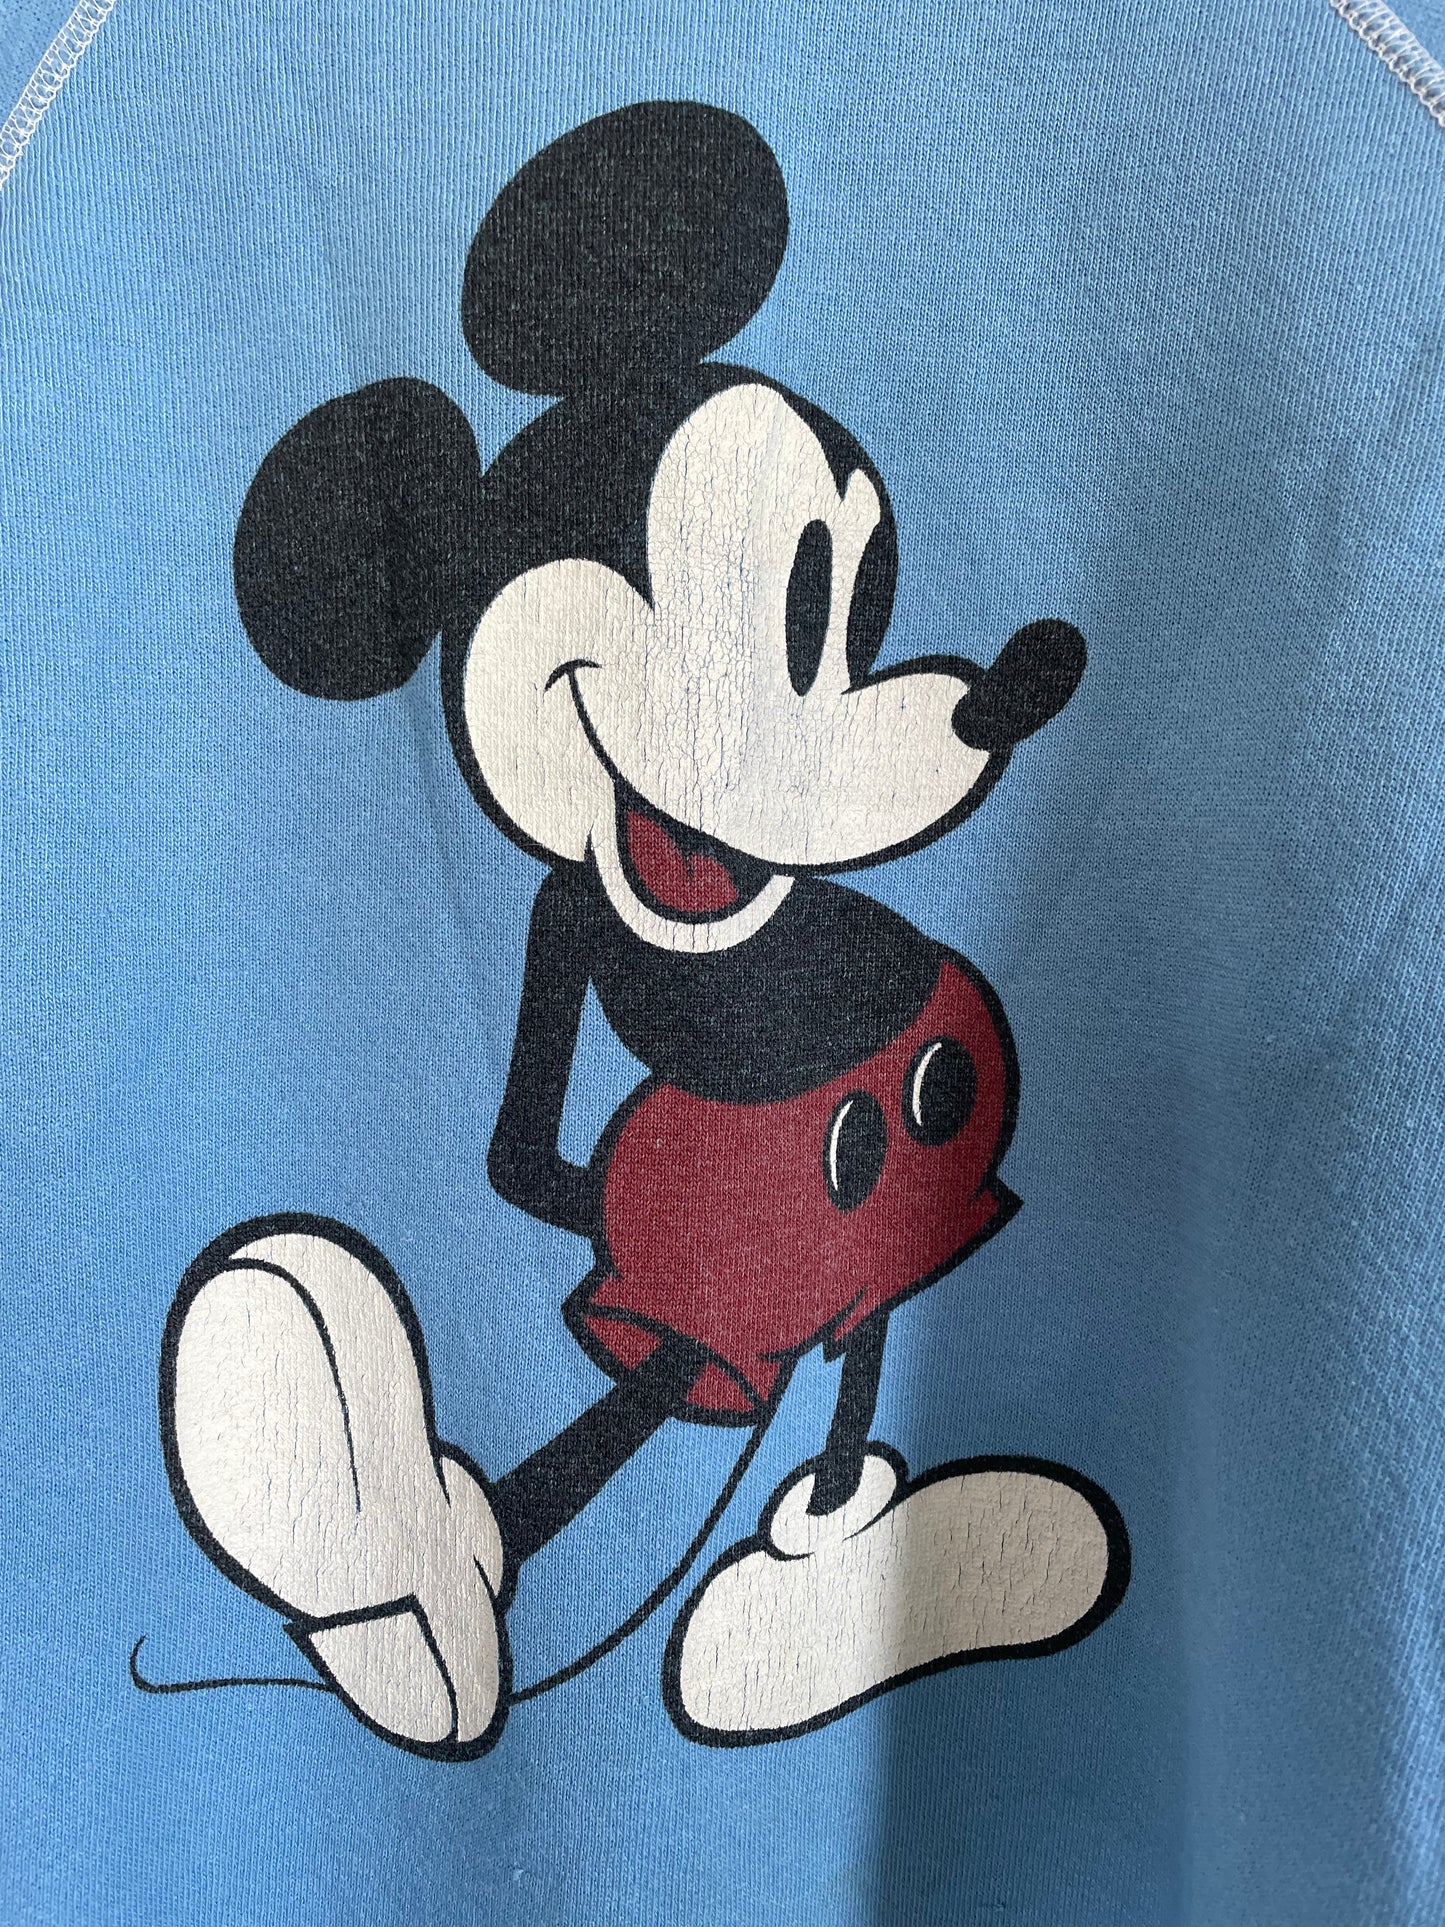 70s/80s Mickey Mouse Sweatshirt